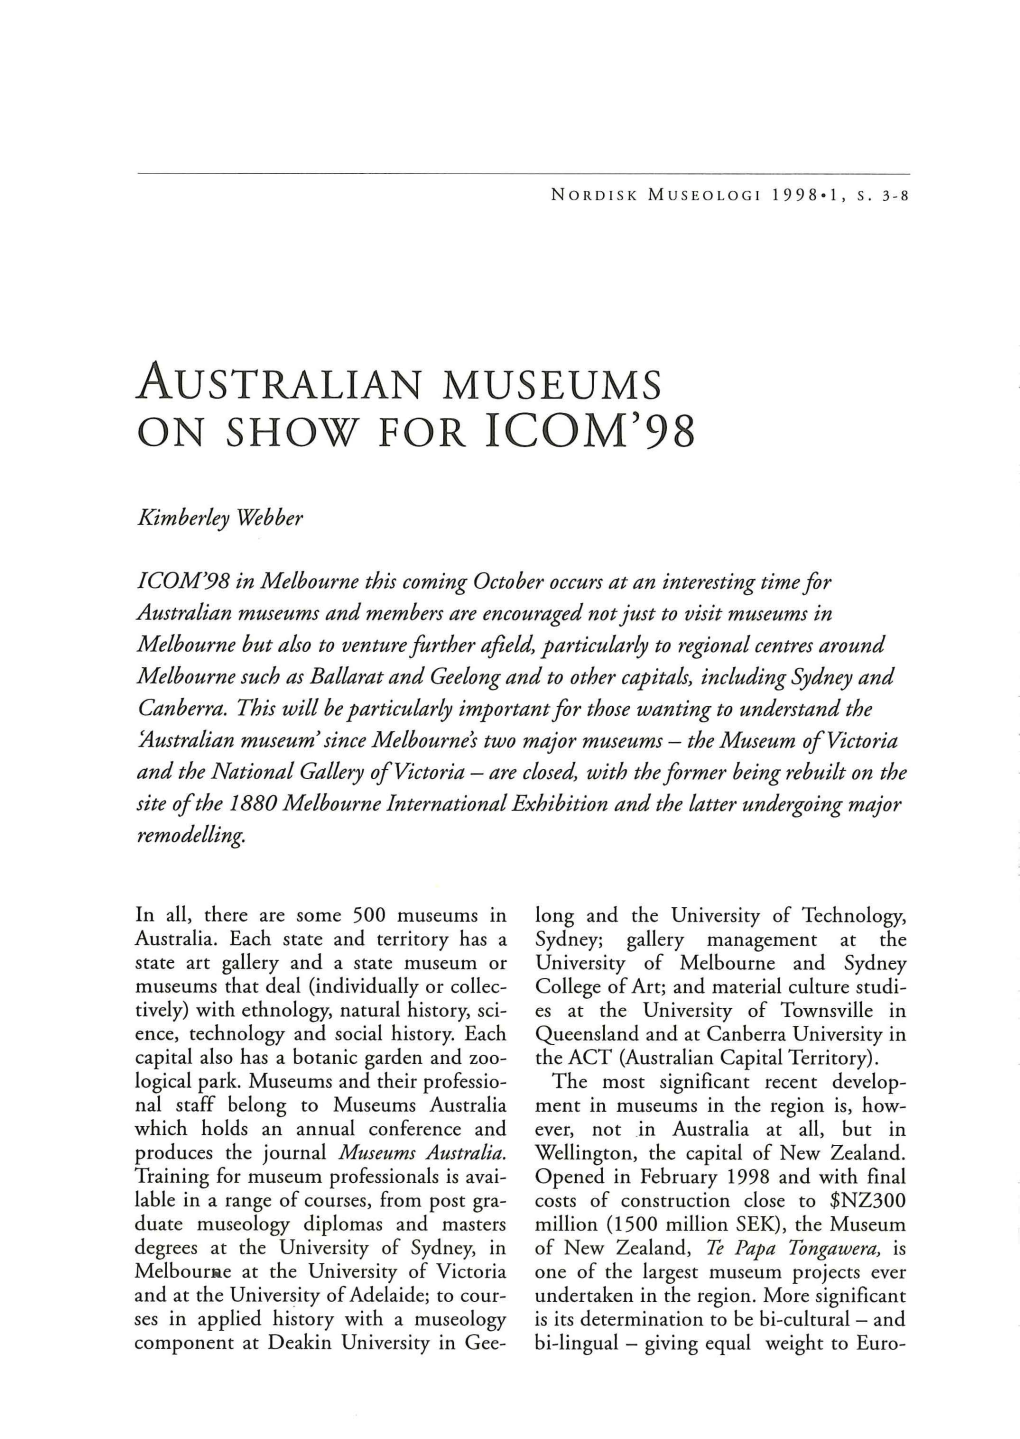 Australian Museums on Show for Icom'98